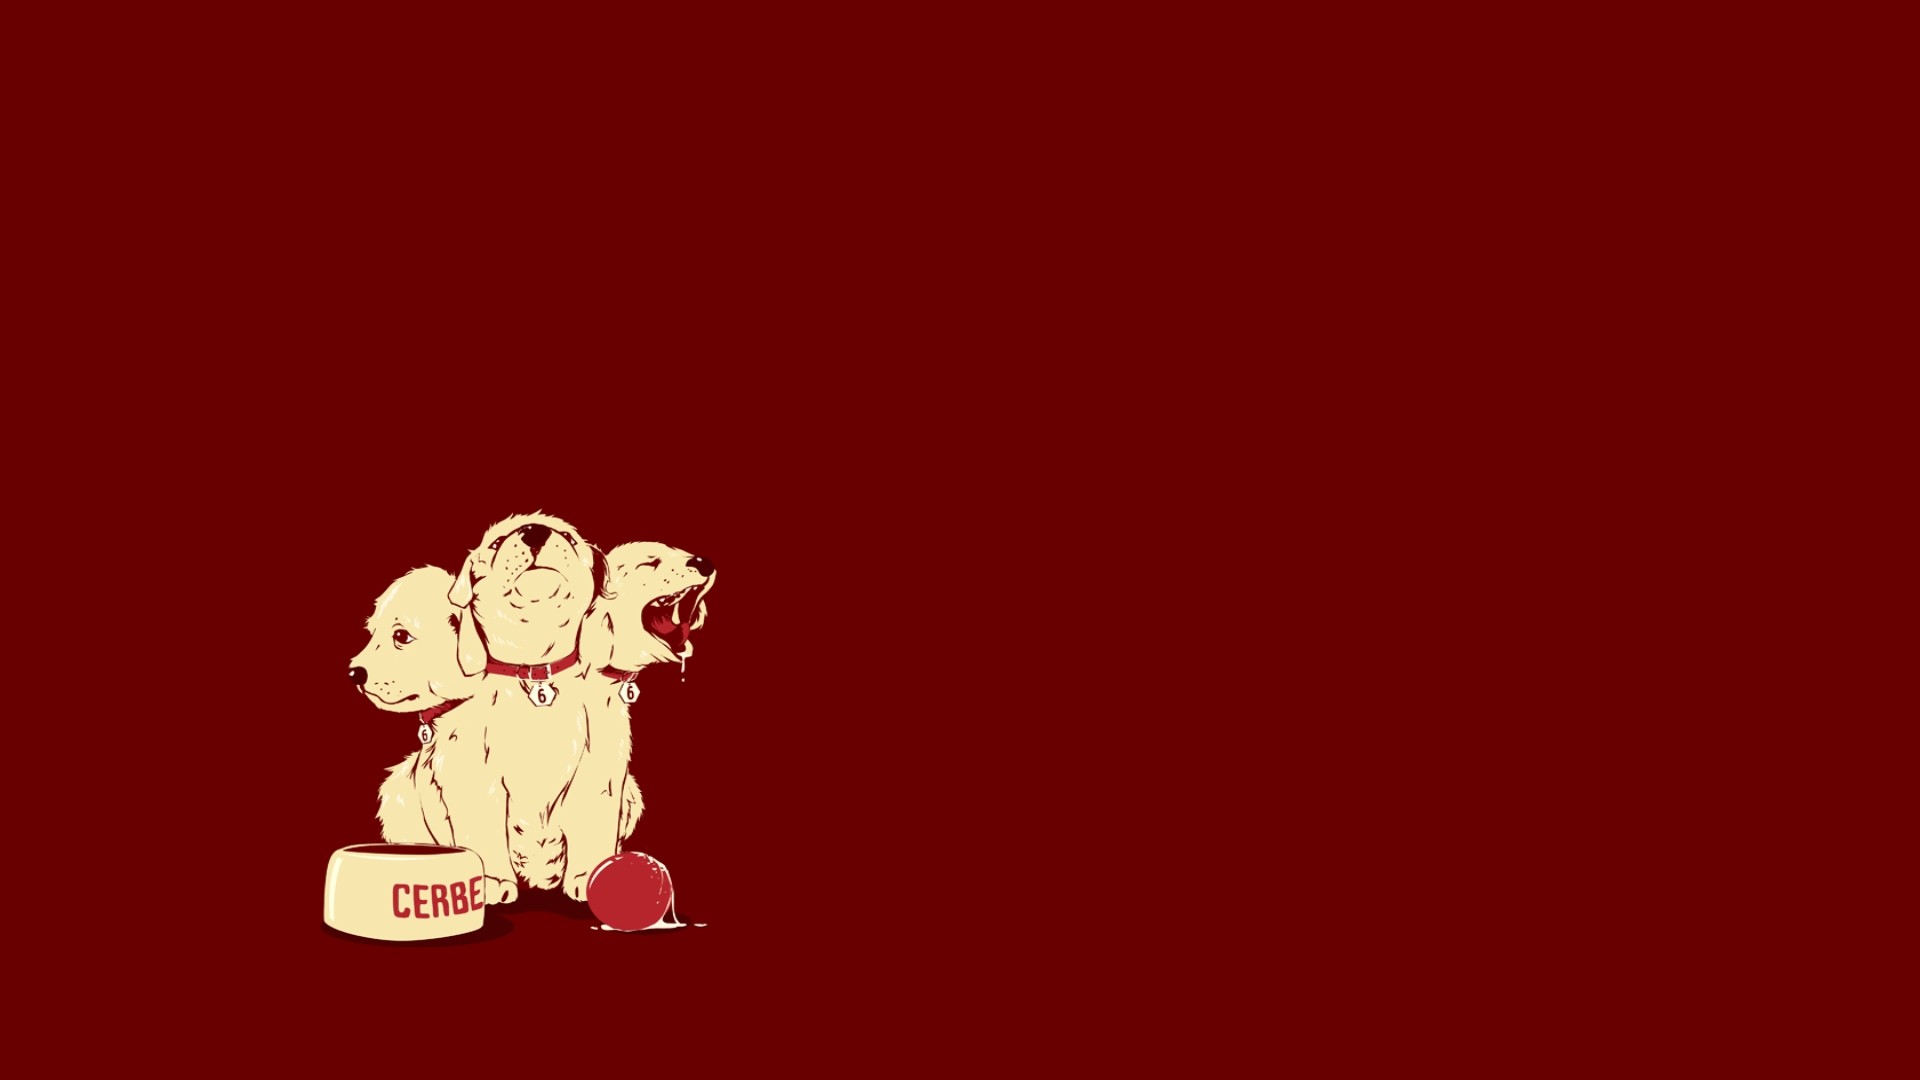 General 1920x1080 red background simple background animals dog Cerberus minimalism